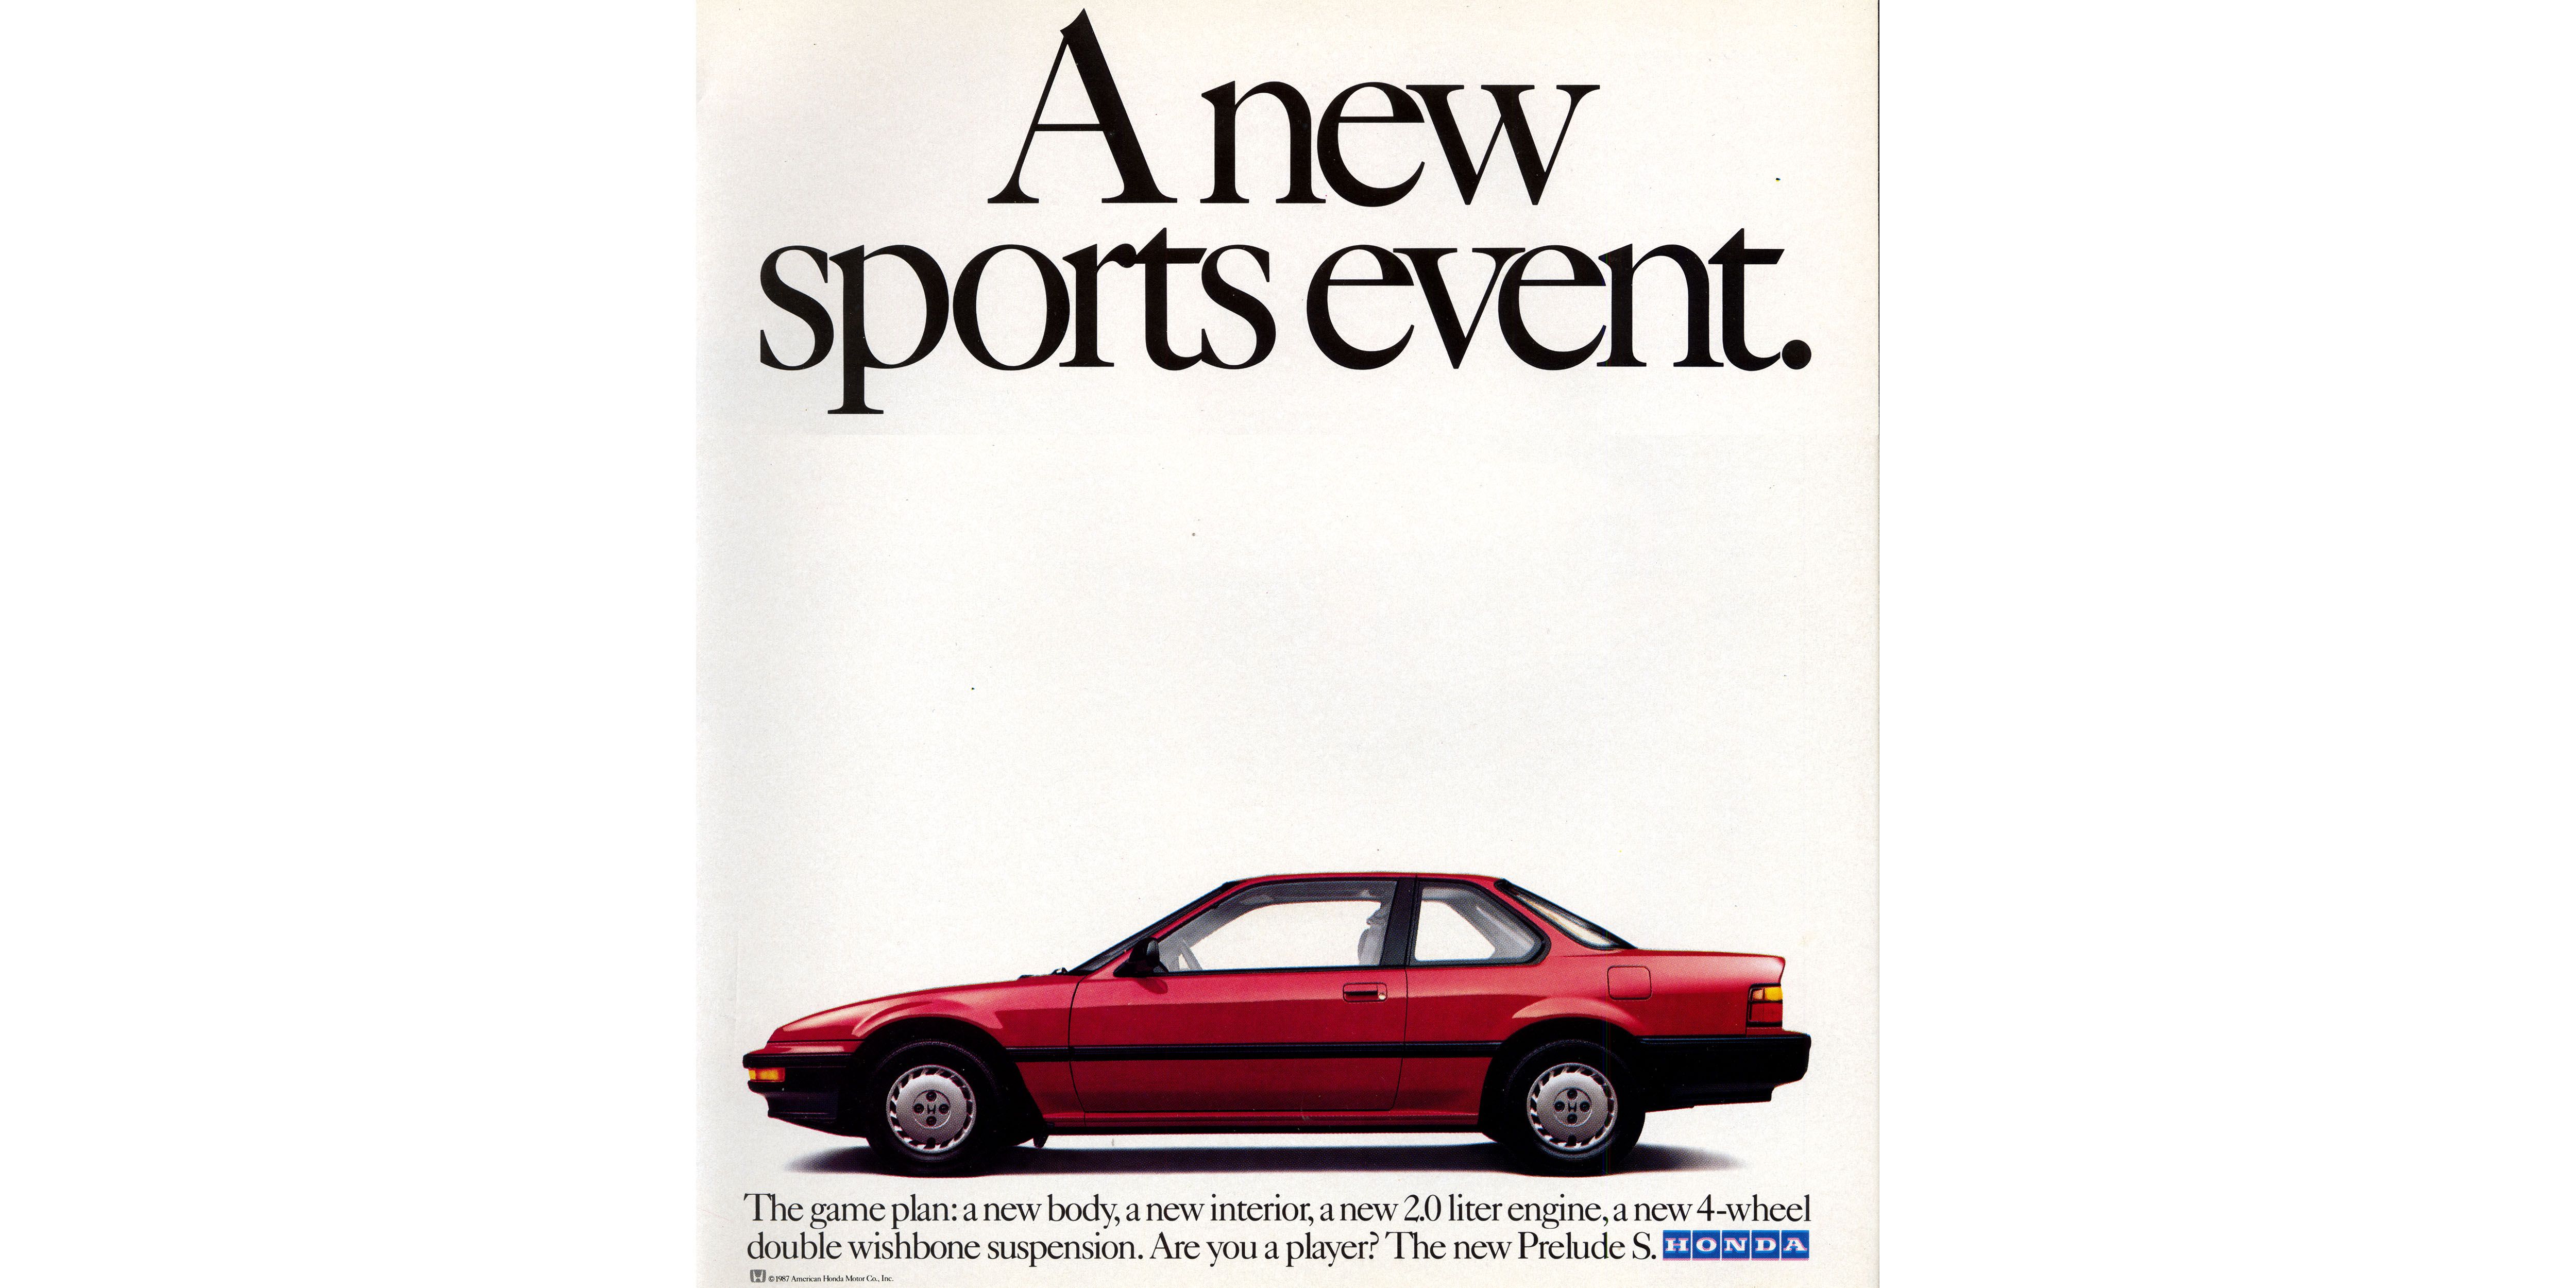 1988 Honda Prelude S Is the Future, Except for the Carburetors